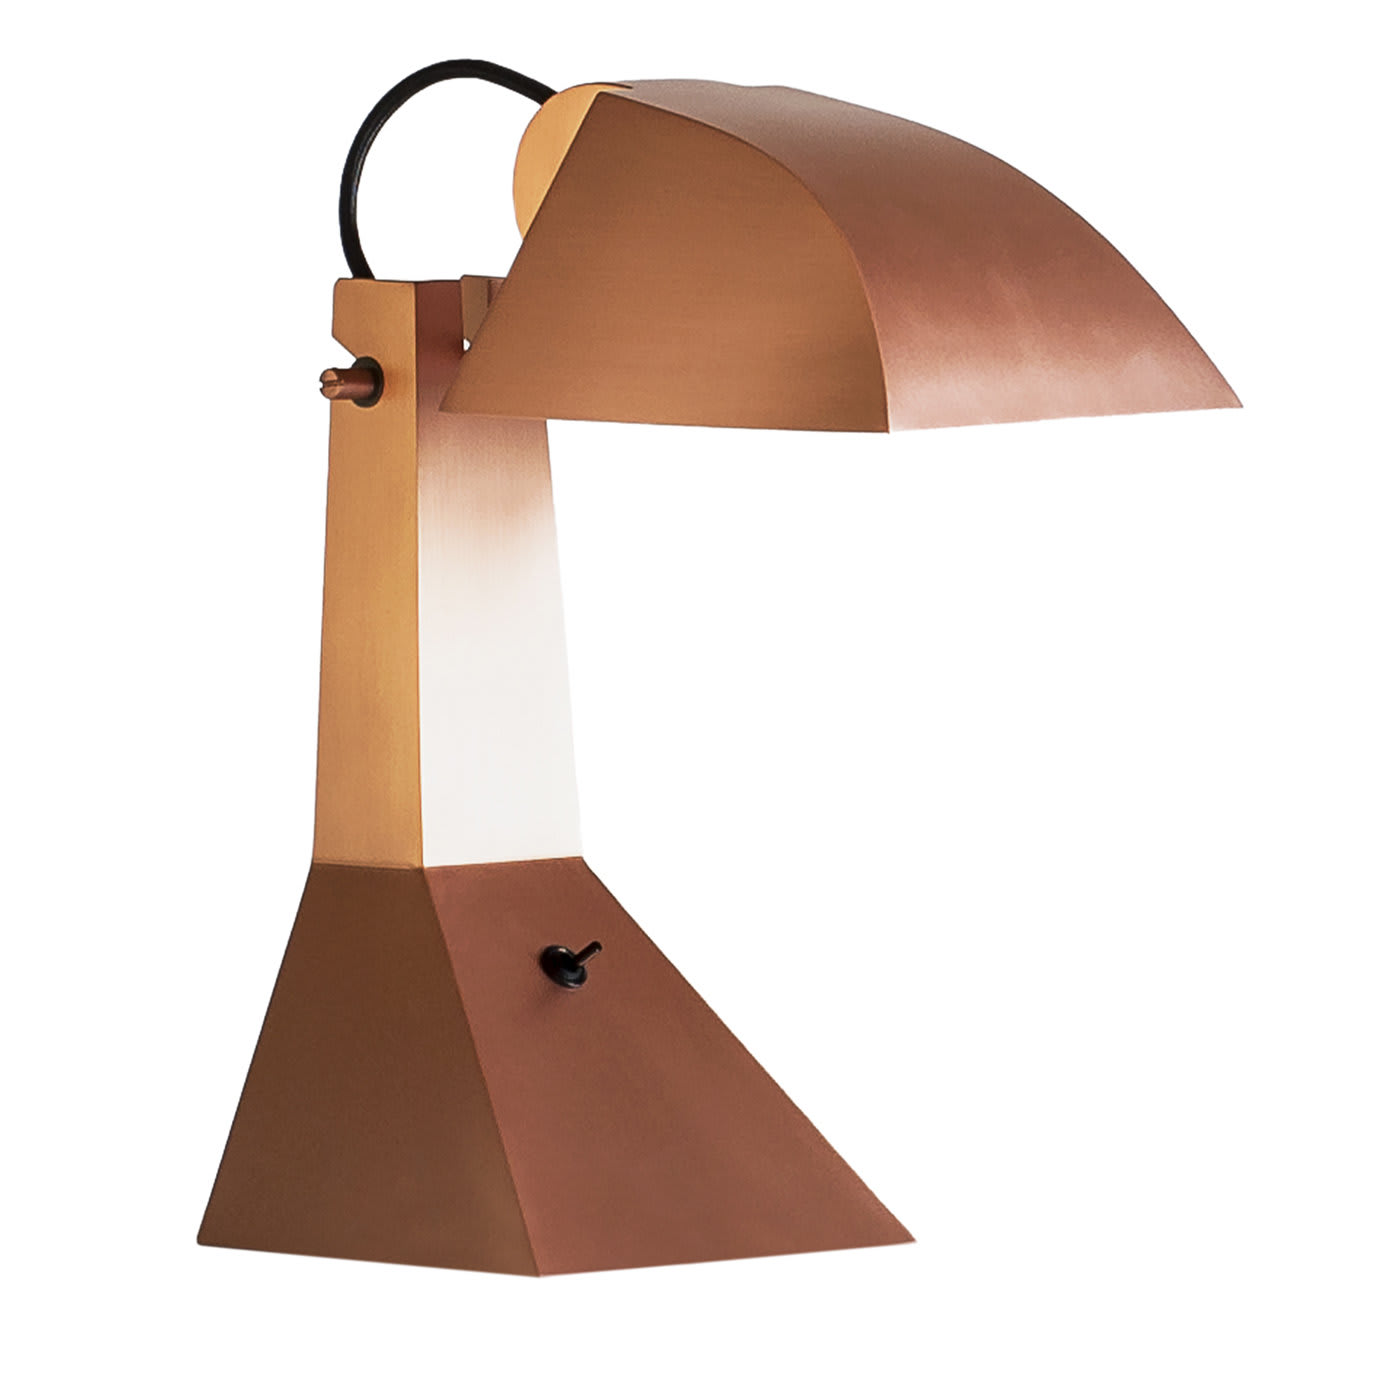 E63 Table Lamp by Umberto Riva #2 - Tacchini